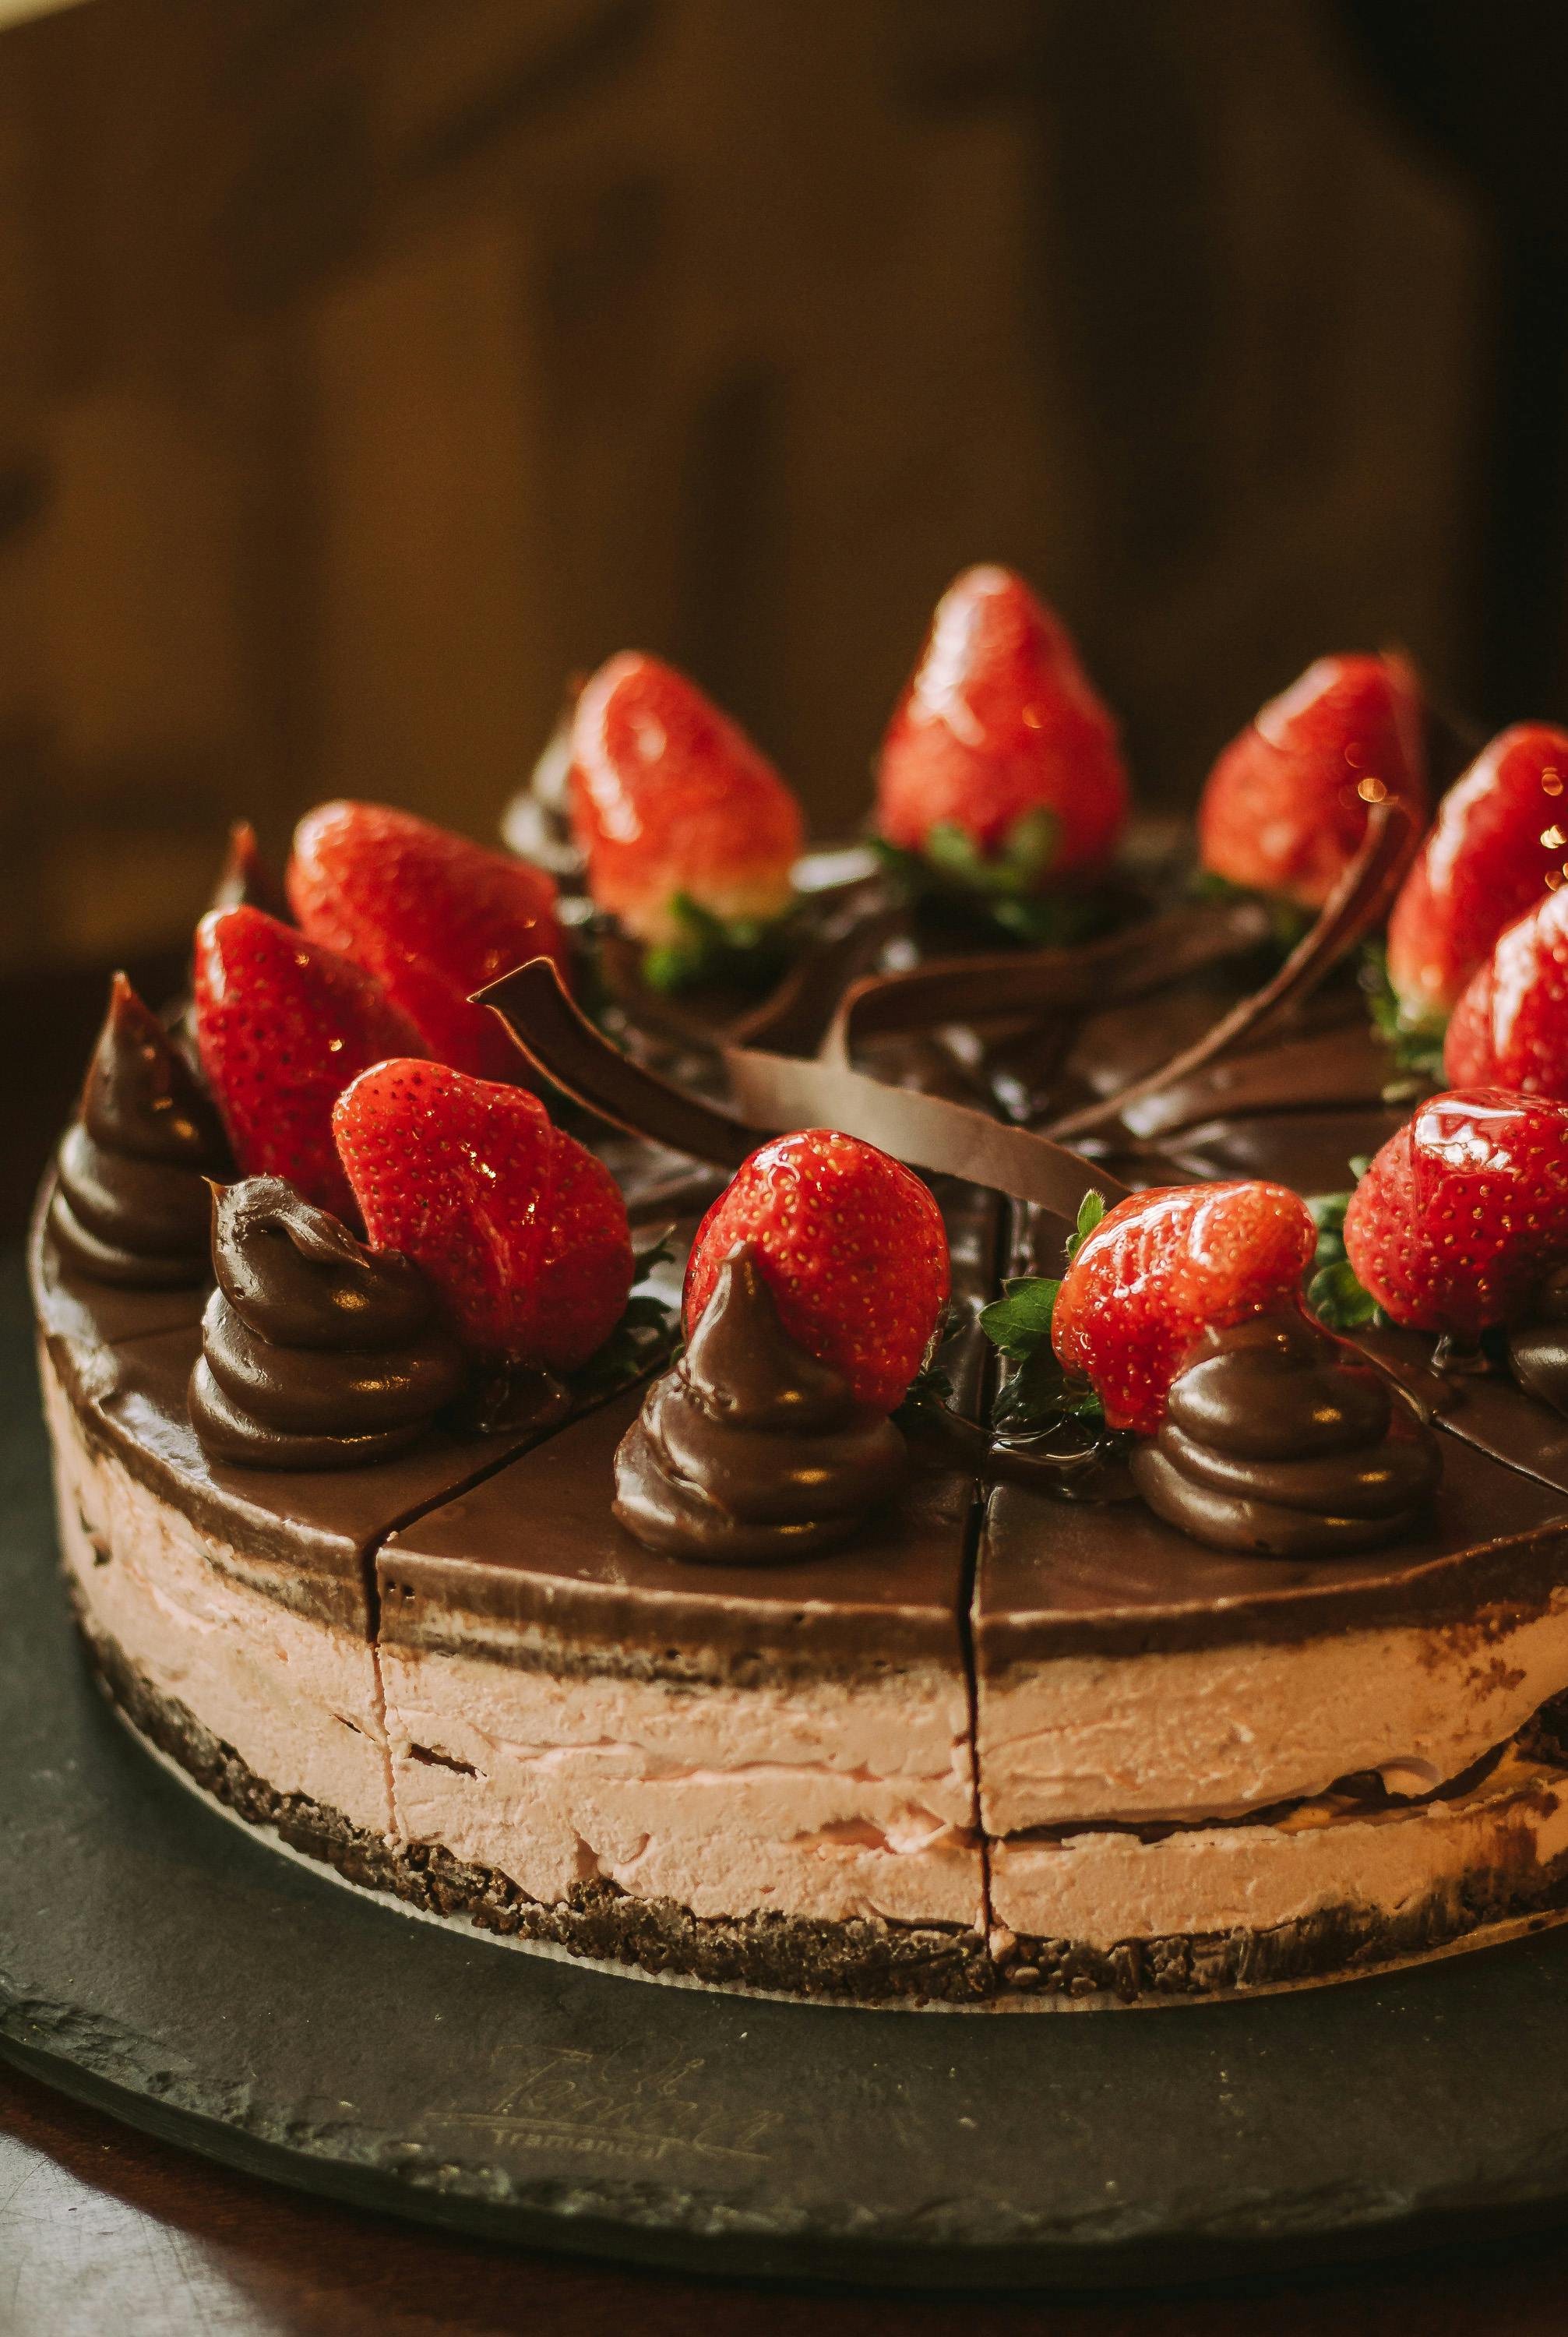 Chocolate frosted cake - Recipes - delicious.com.au